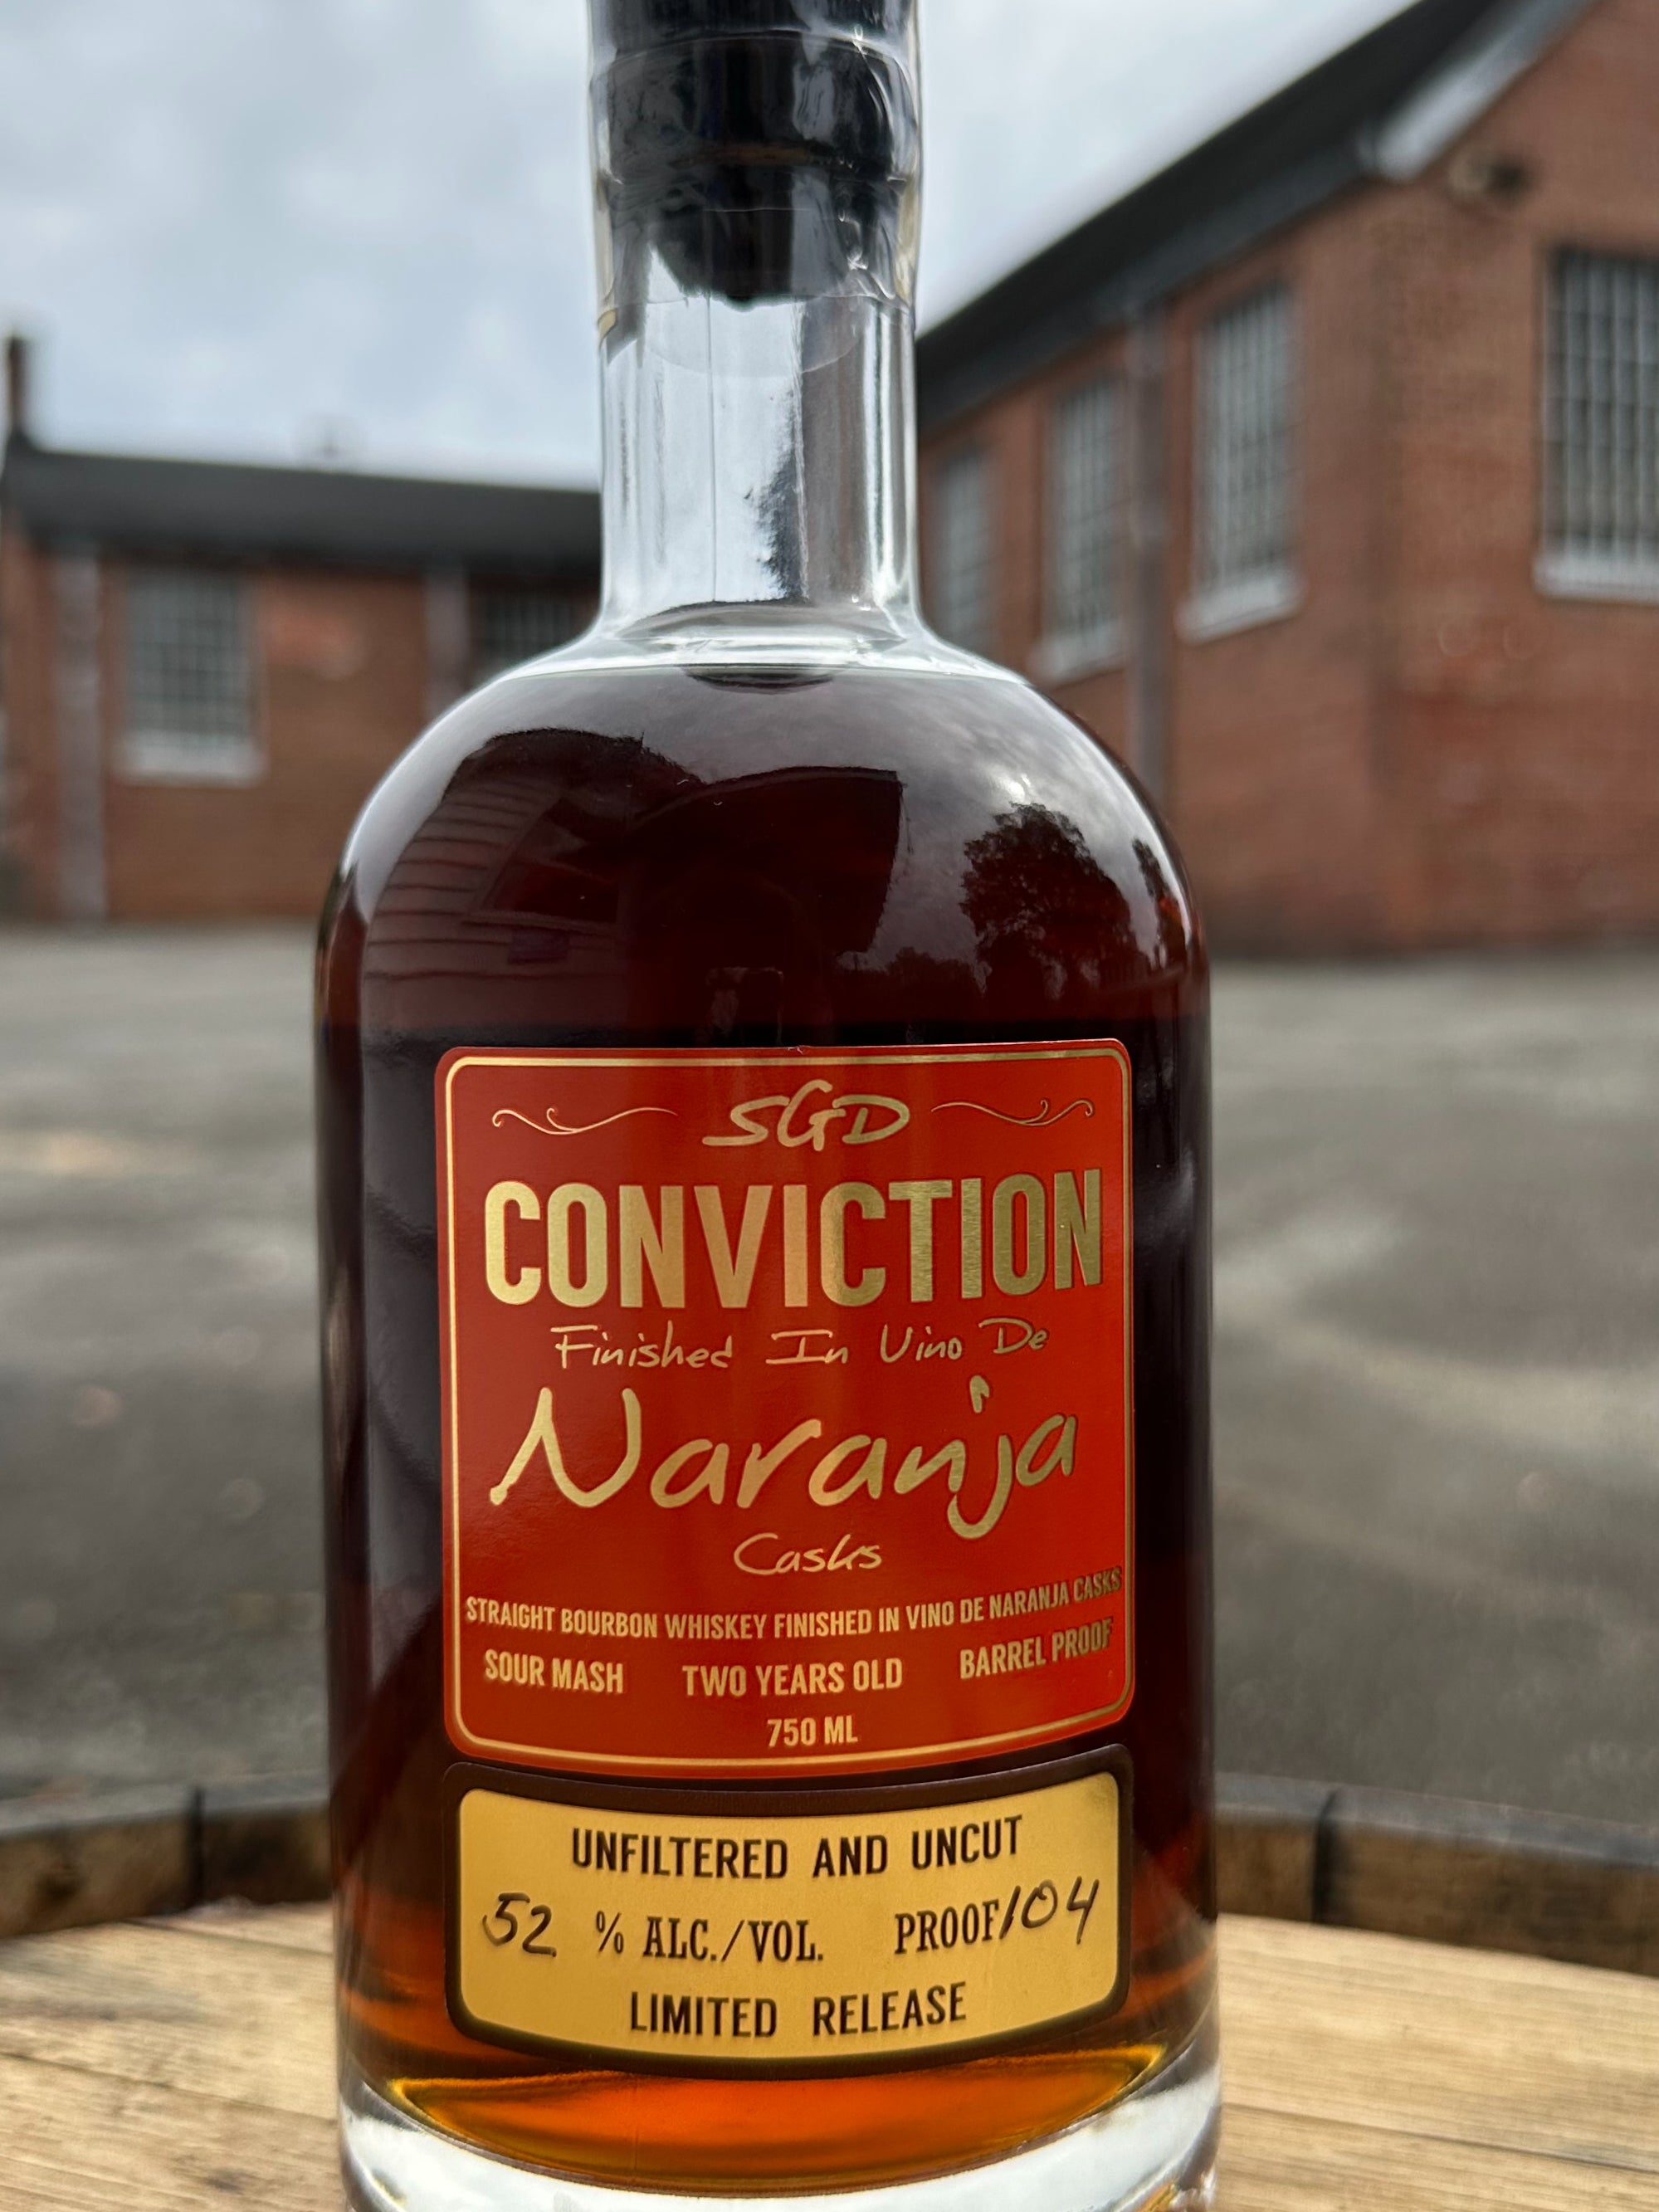 BUY] Conviction 1929 Double Oak Straight Bourbon Whiskey at